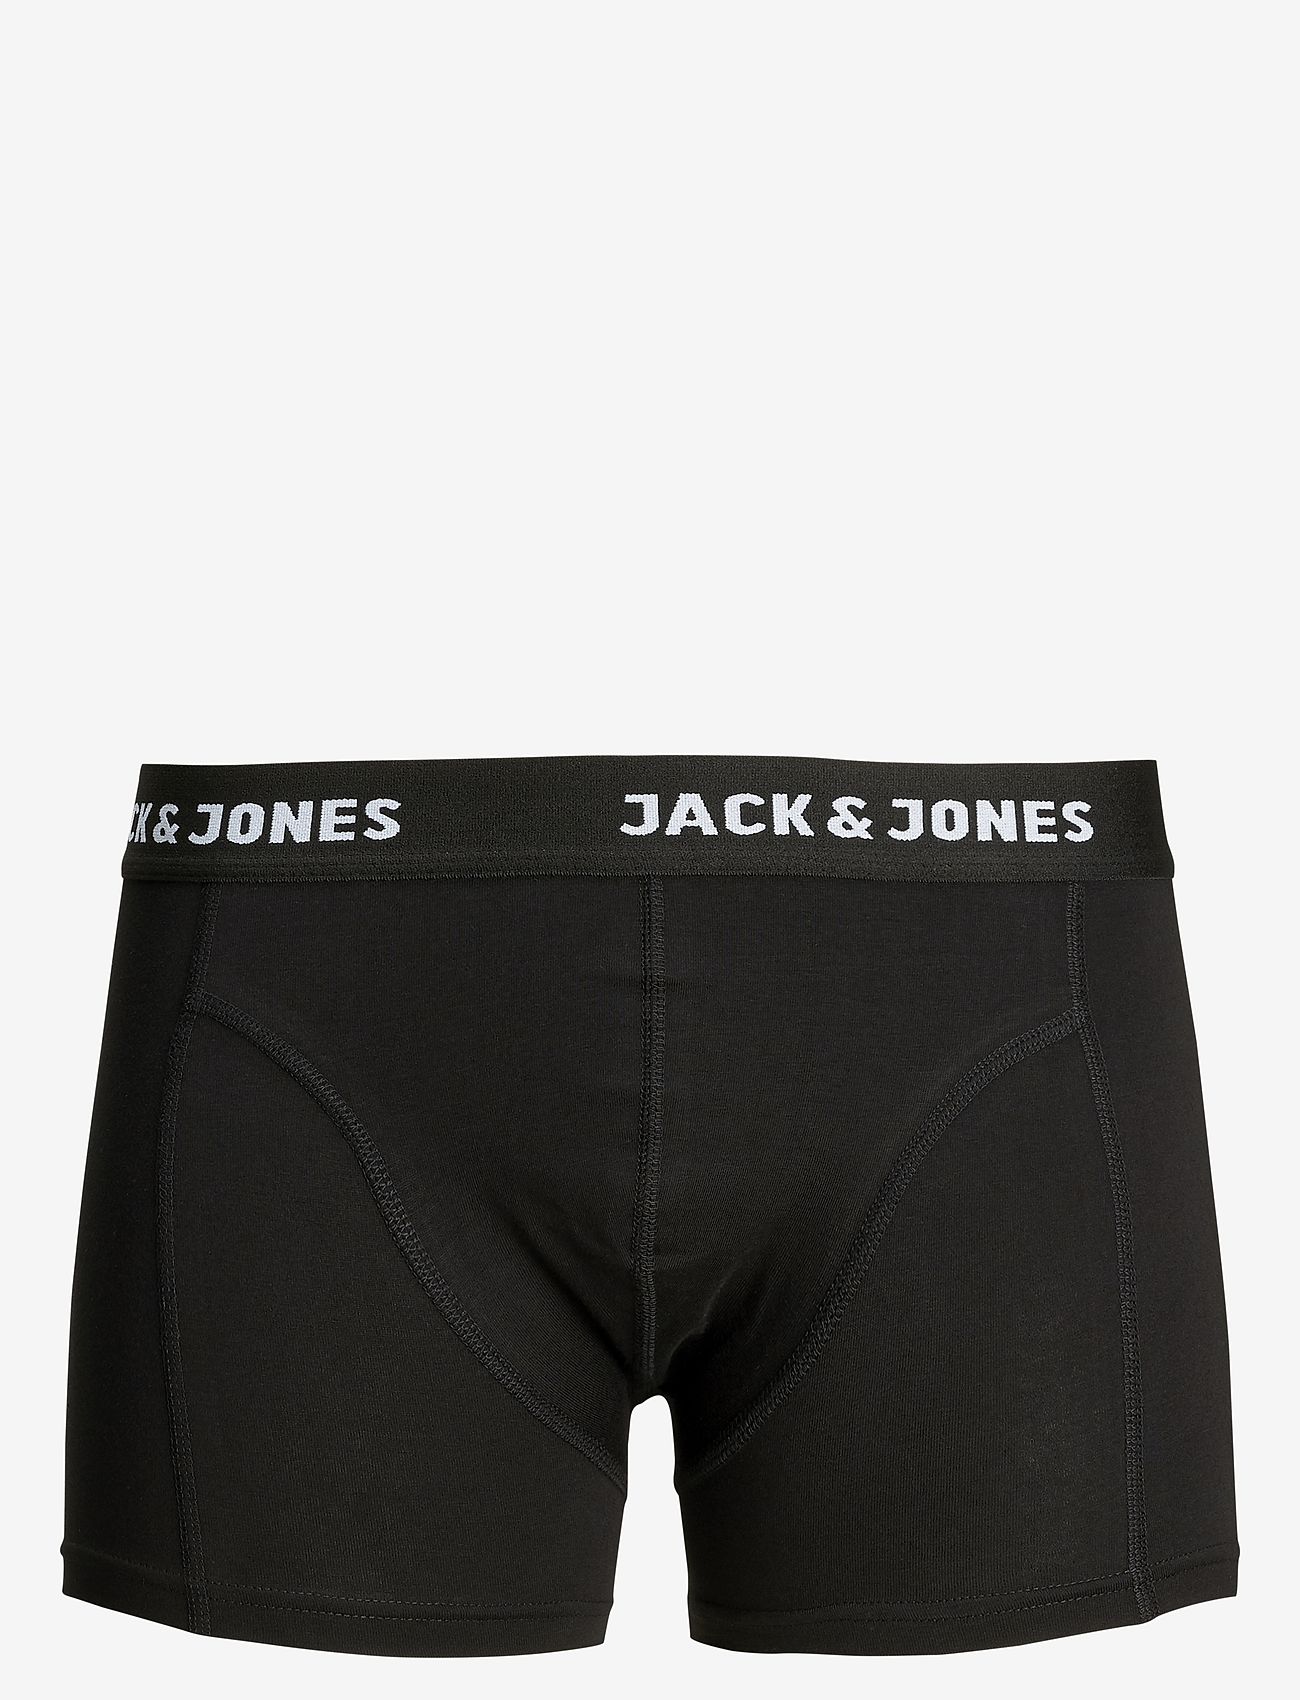 Jack & Jones - JACANTHONY TRUNKS 3 PACK BLACK - lowest prices - black - 1